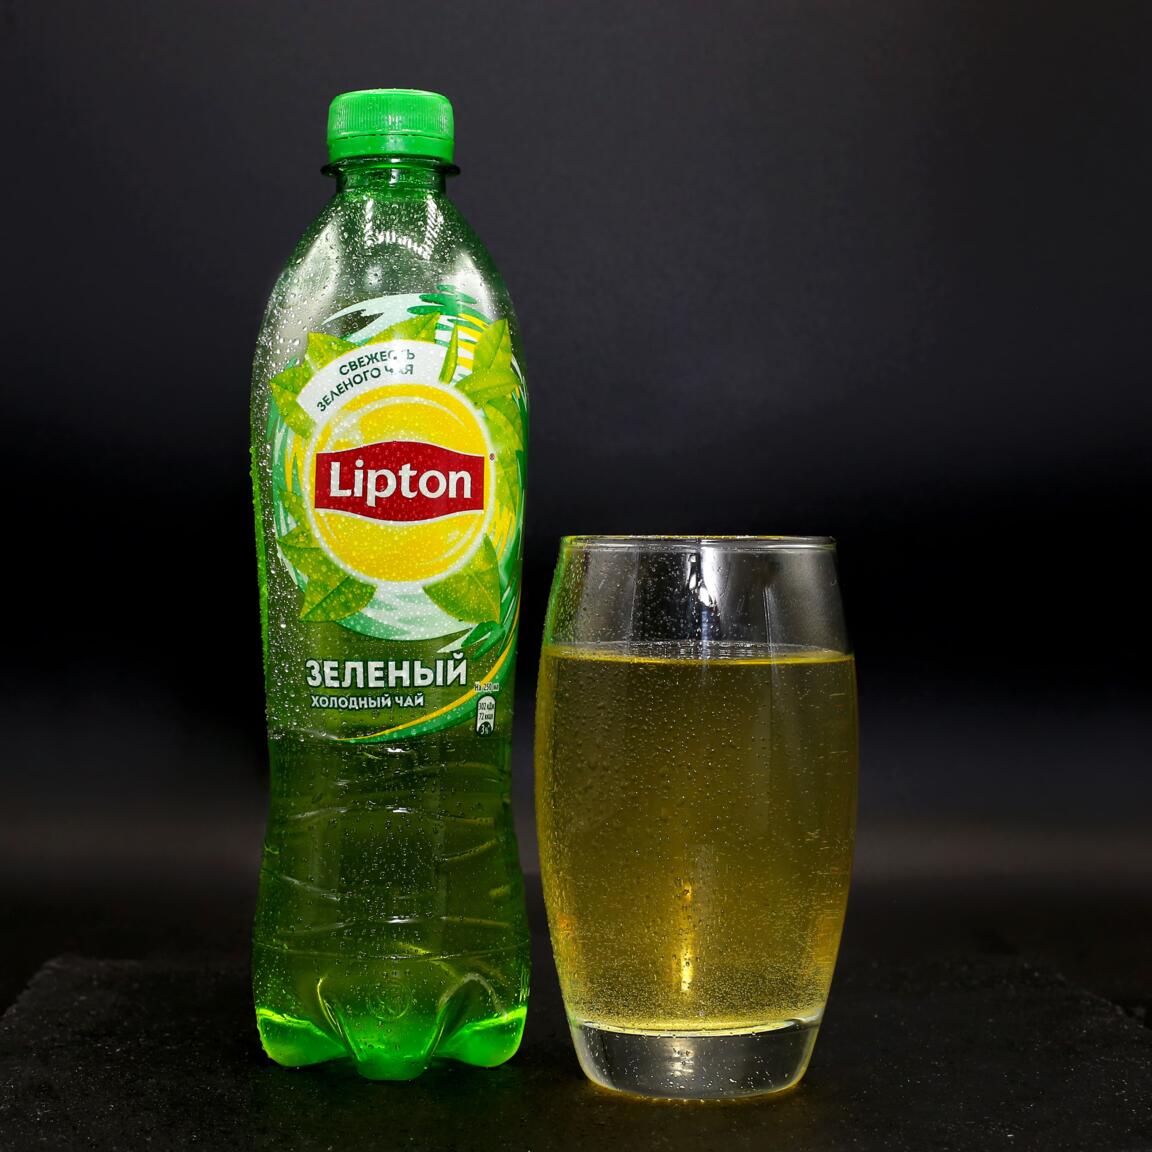 Lipton "Зелёный чай" 0.5